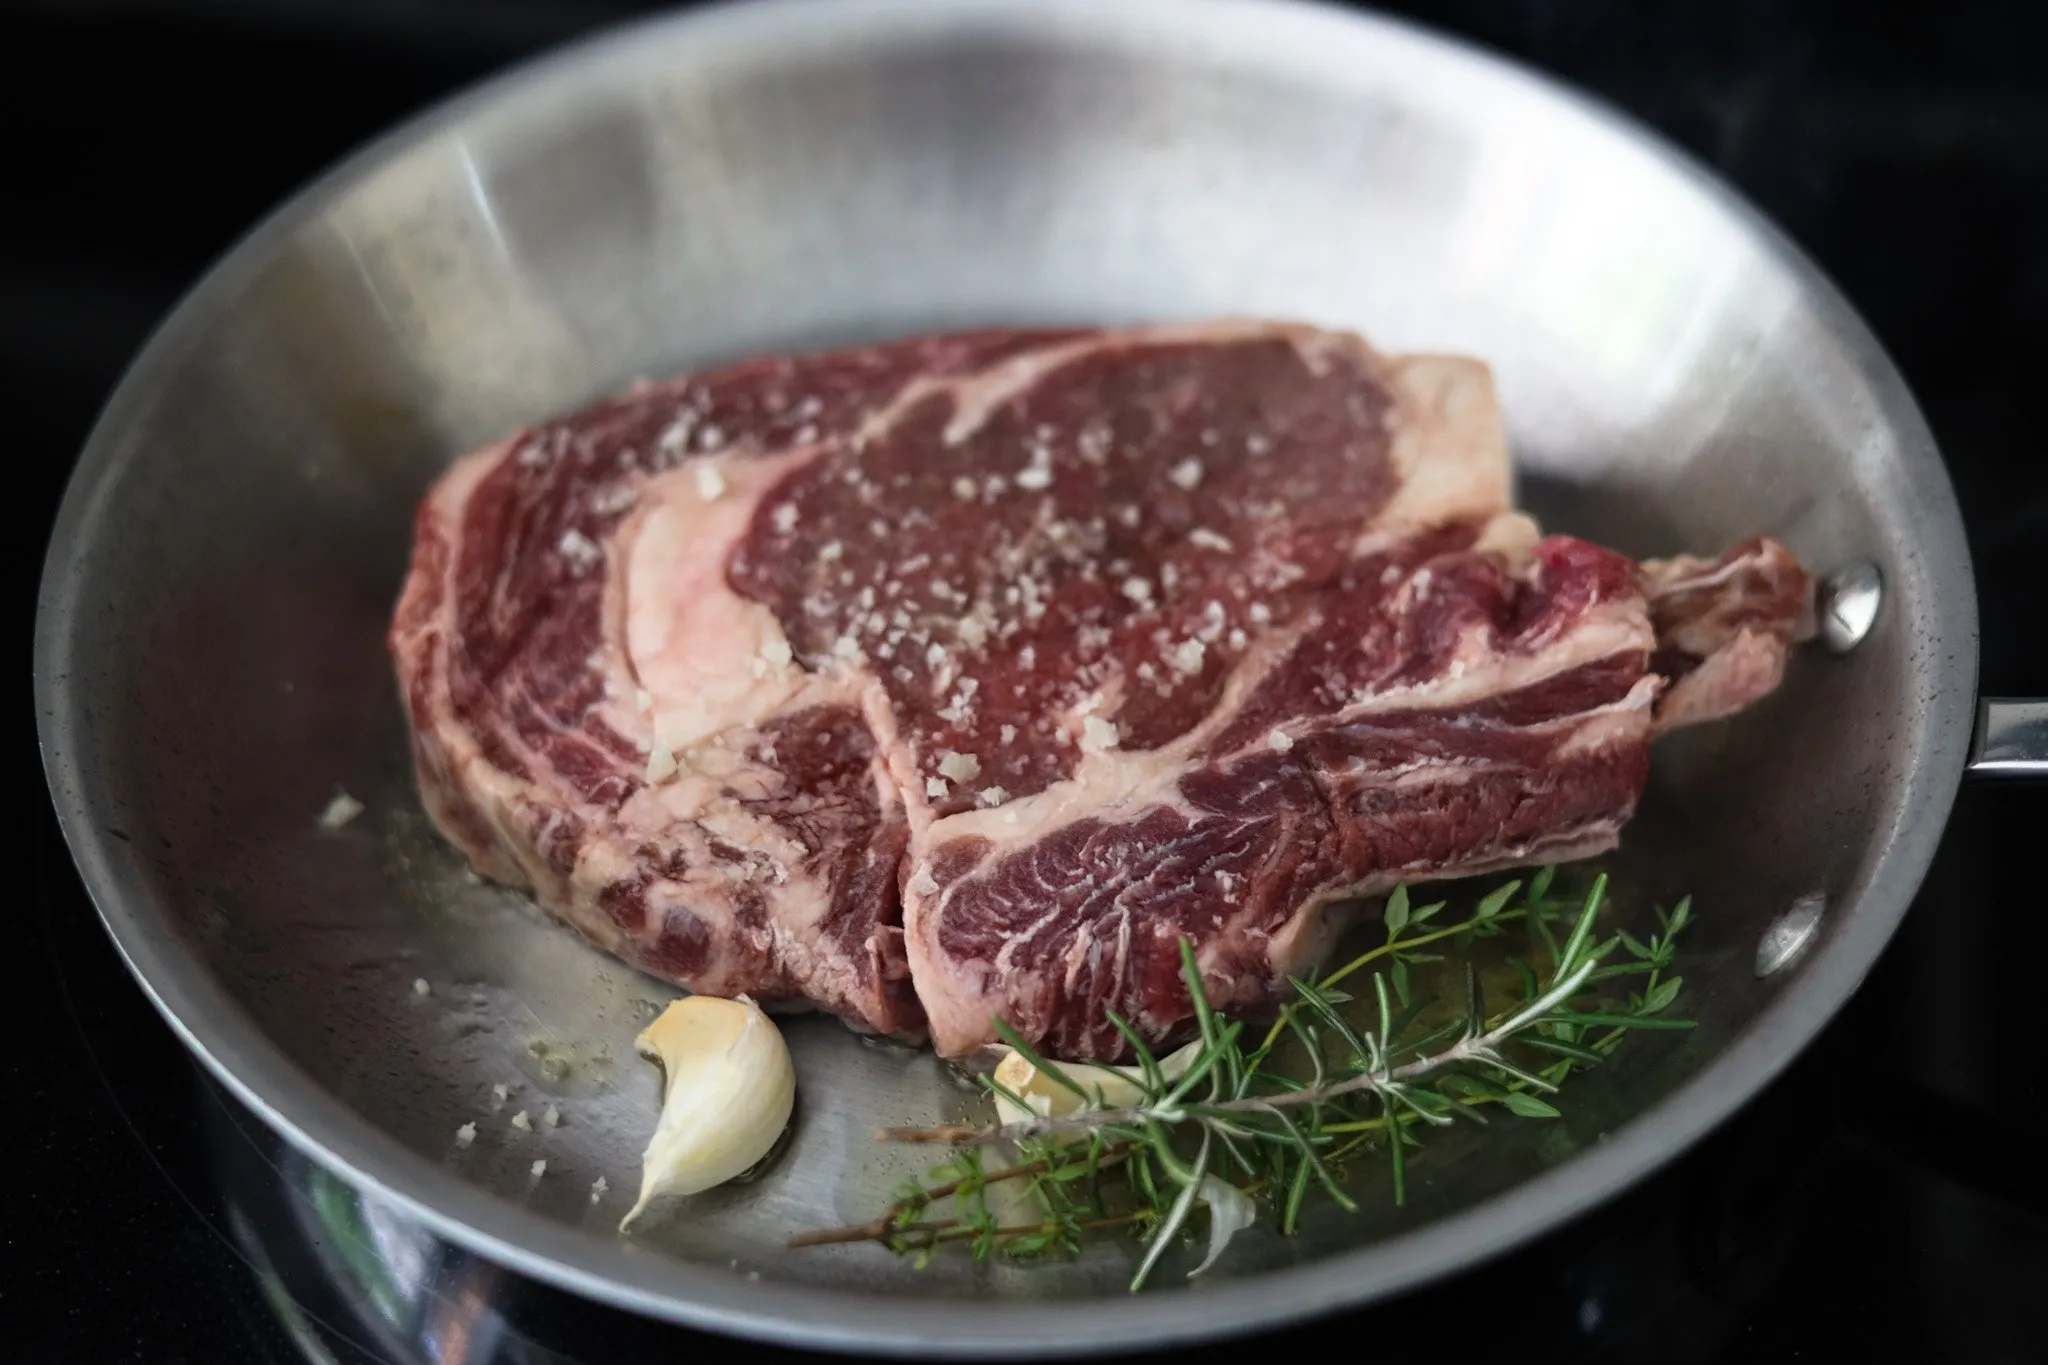 a raw ribeye steak searing in the pan with fresh herbs and garlic